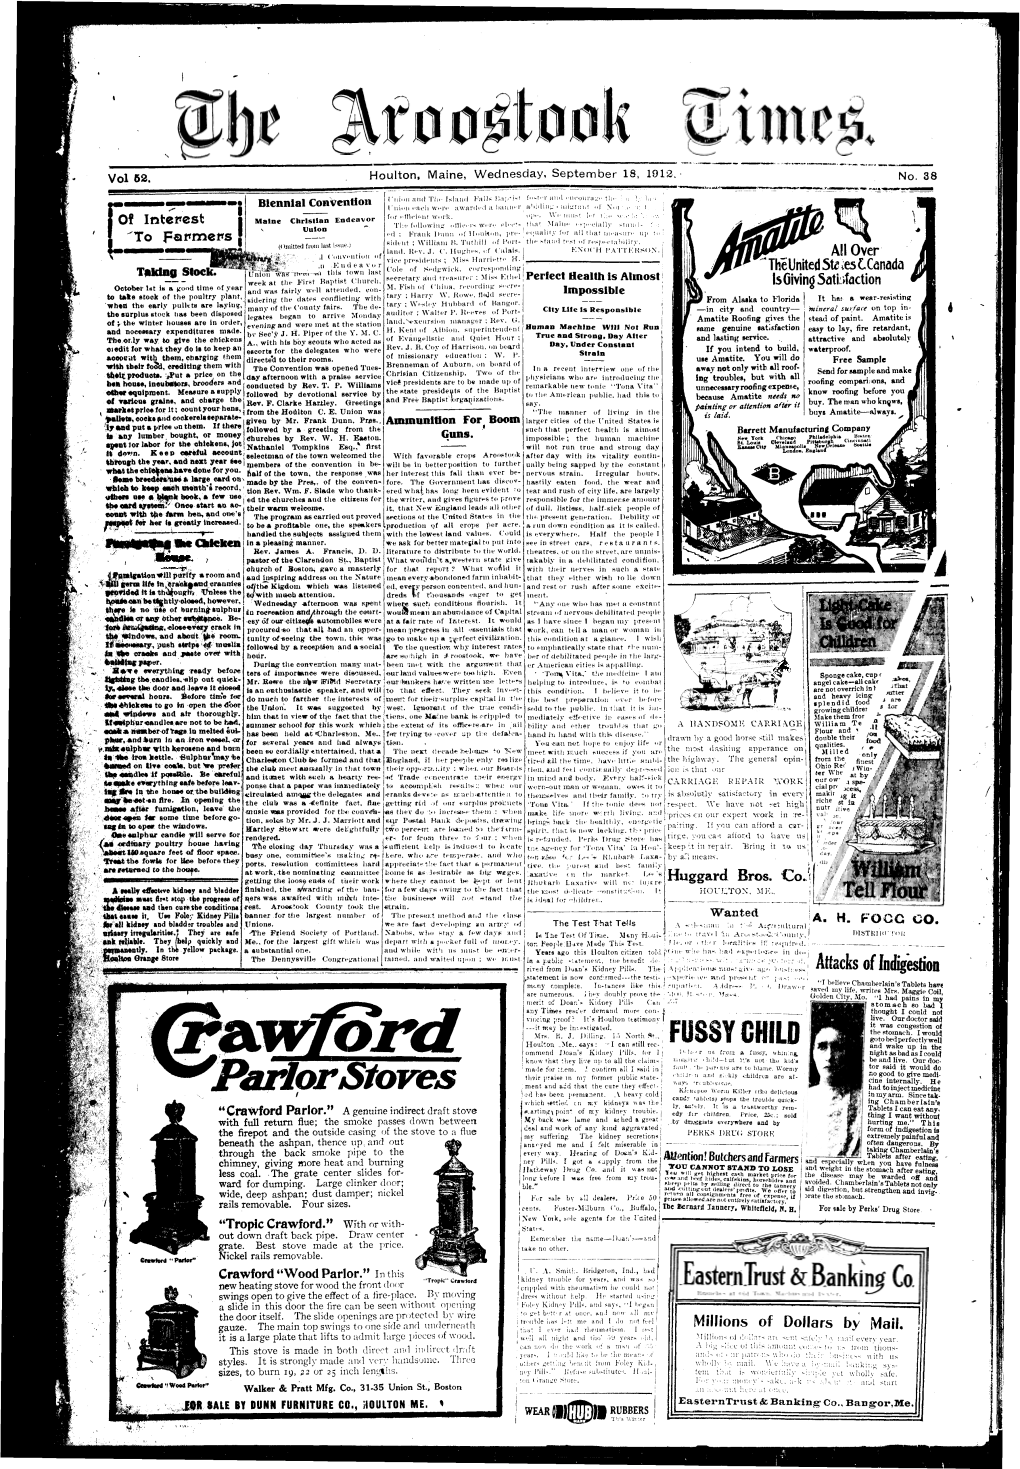 The Aroostook Times, September 18, 1912